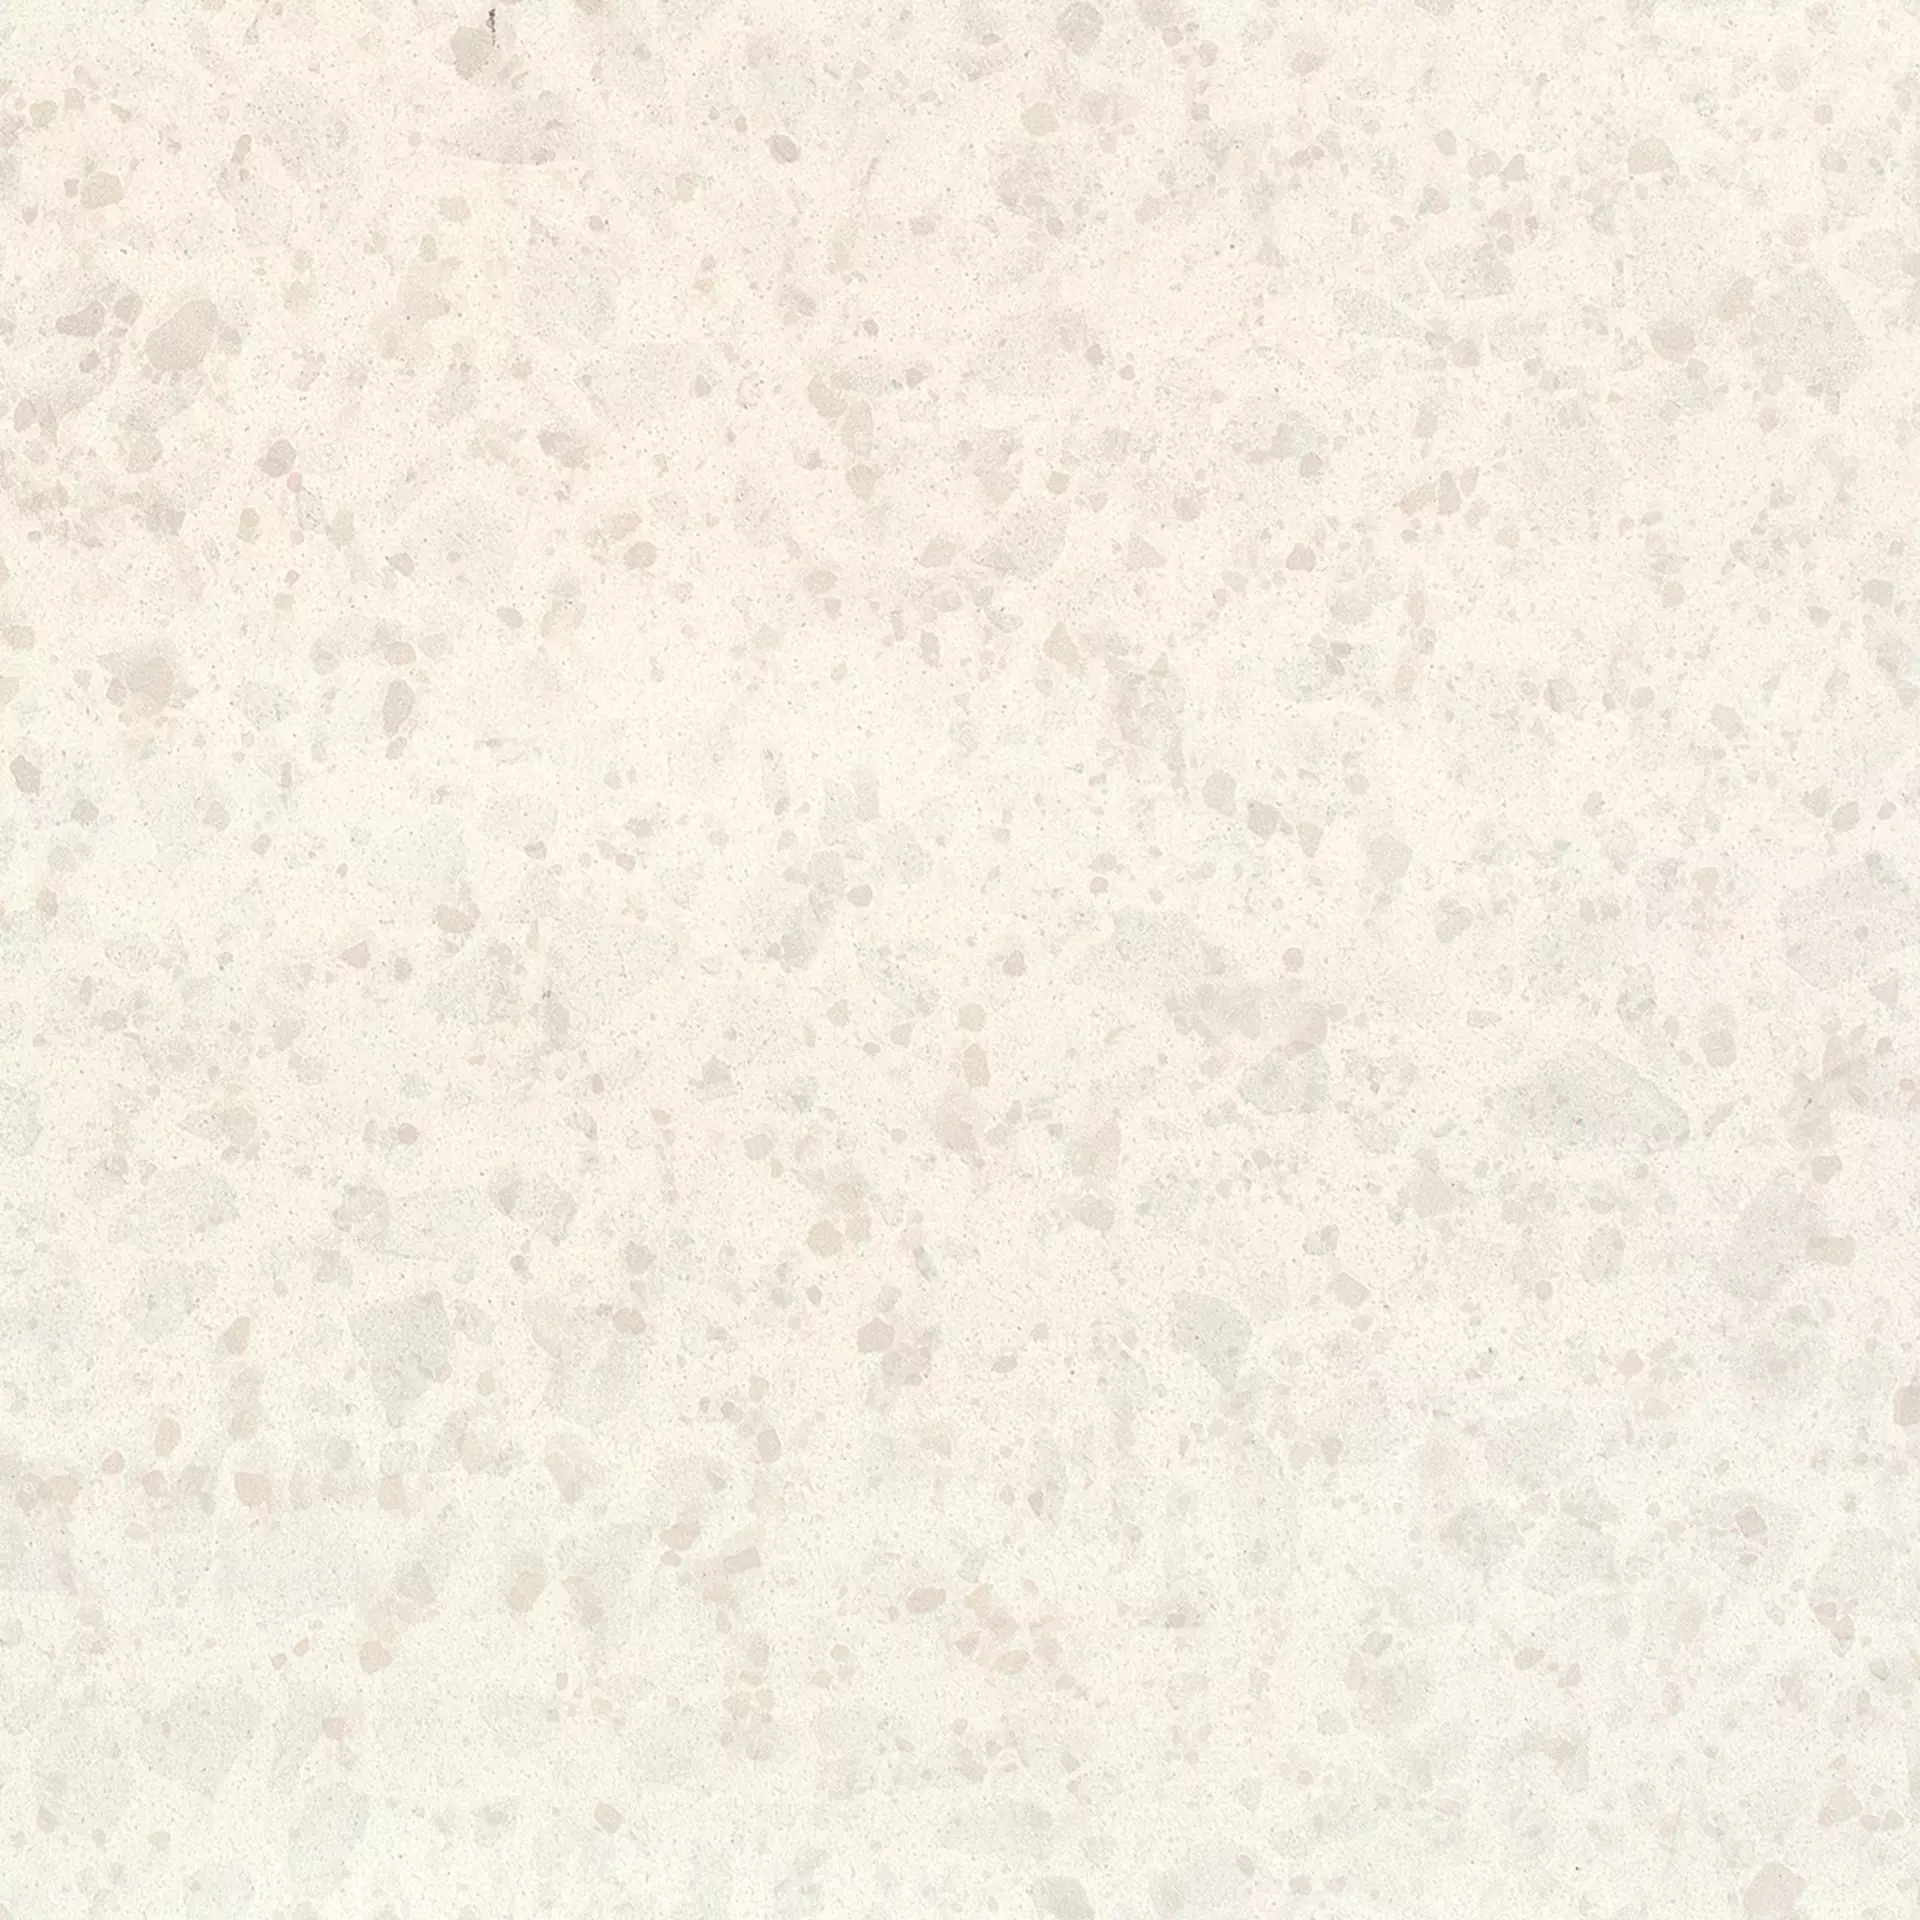 Gigacer Inclusioni Soave Bianco Perla Bocciardato 12INCL60BIAPERBOC 60x60cm 12mm